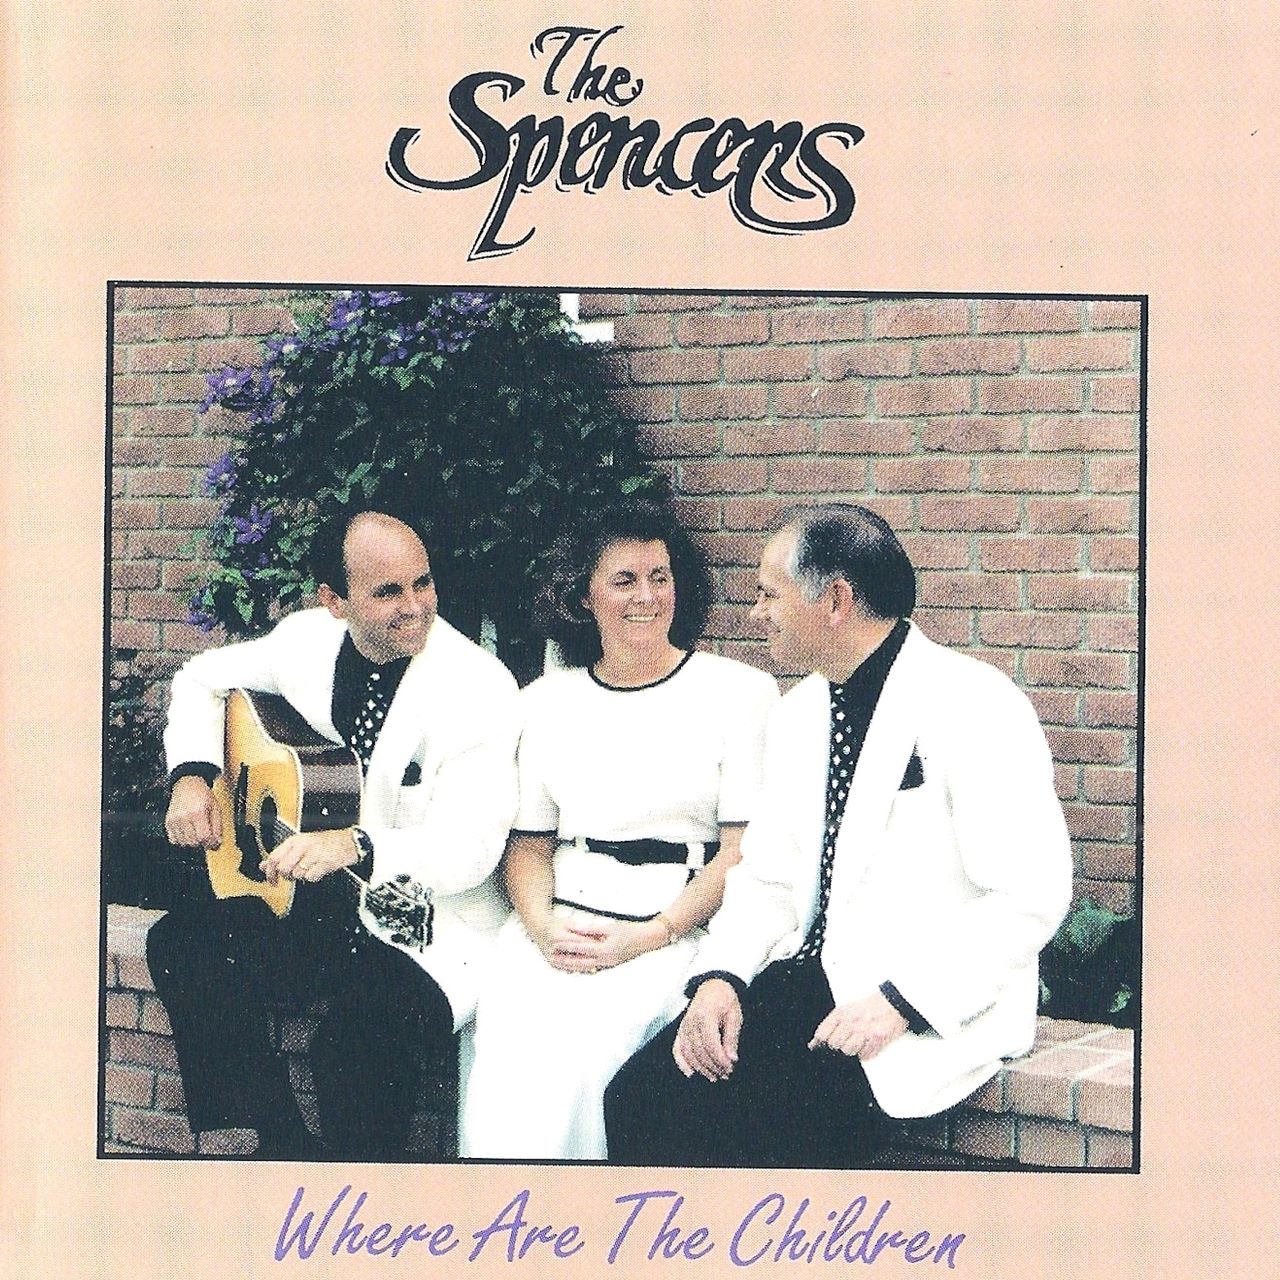 Spencers - Where Are The Children cover album